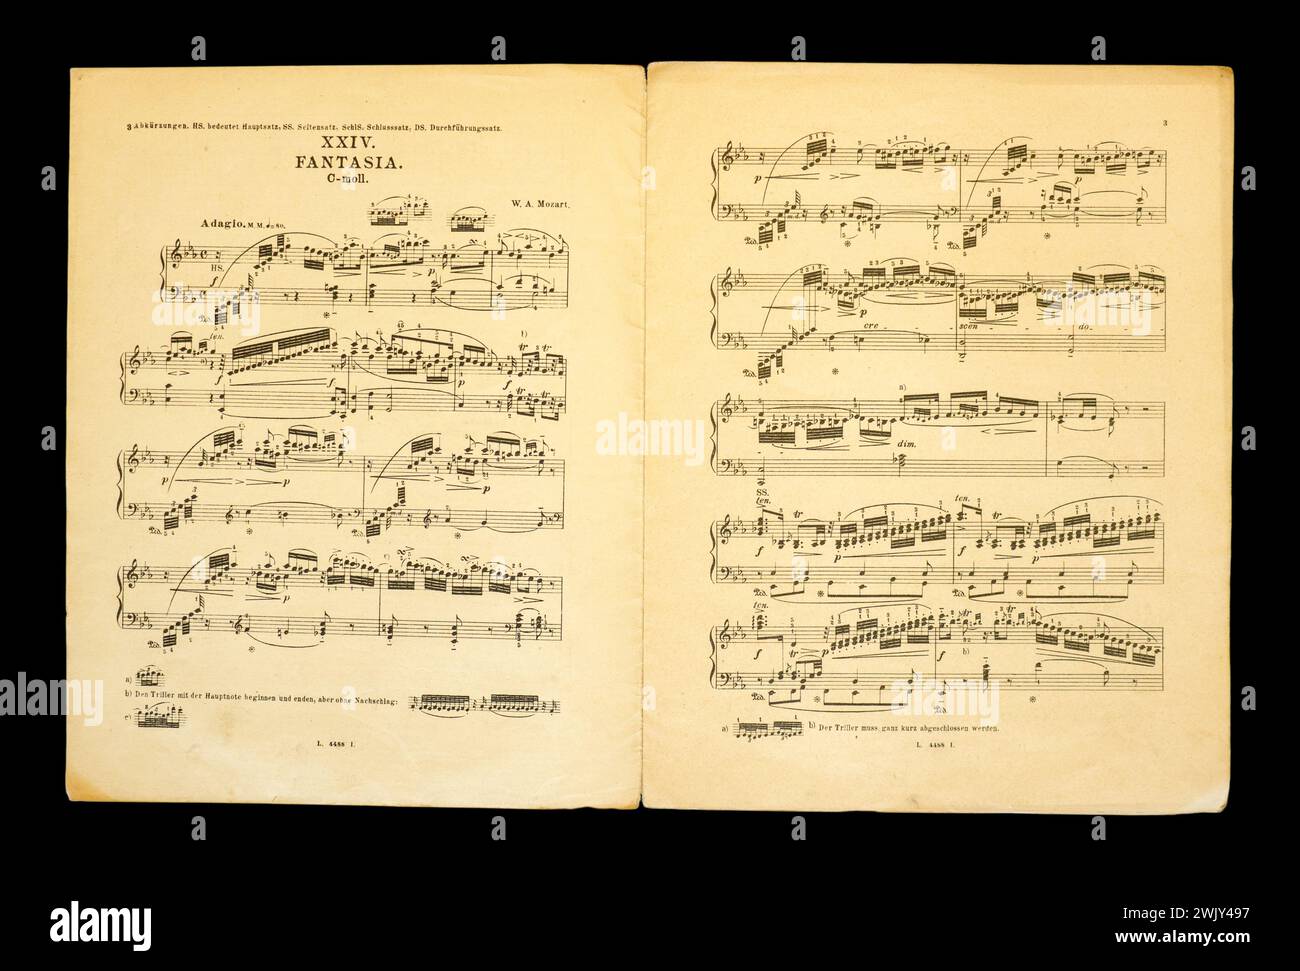 Spartiti "Fantasia in do minore" del compositore Wolfgang Amadeus Mozart. Foto Stock